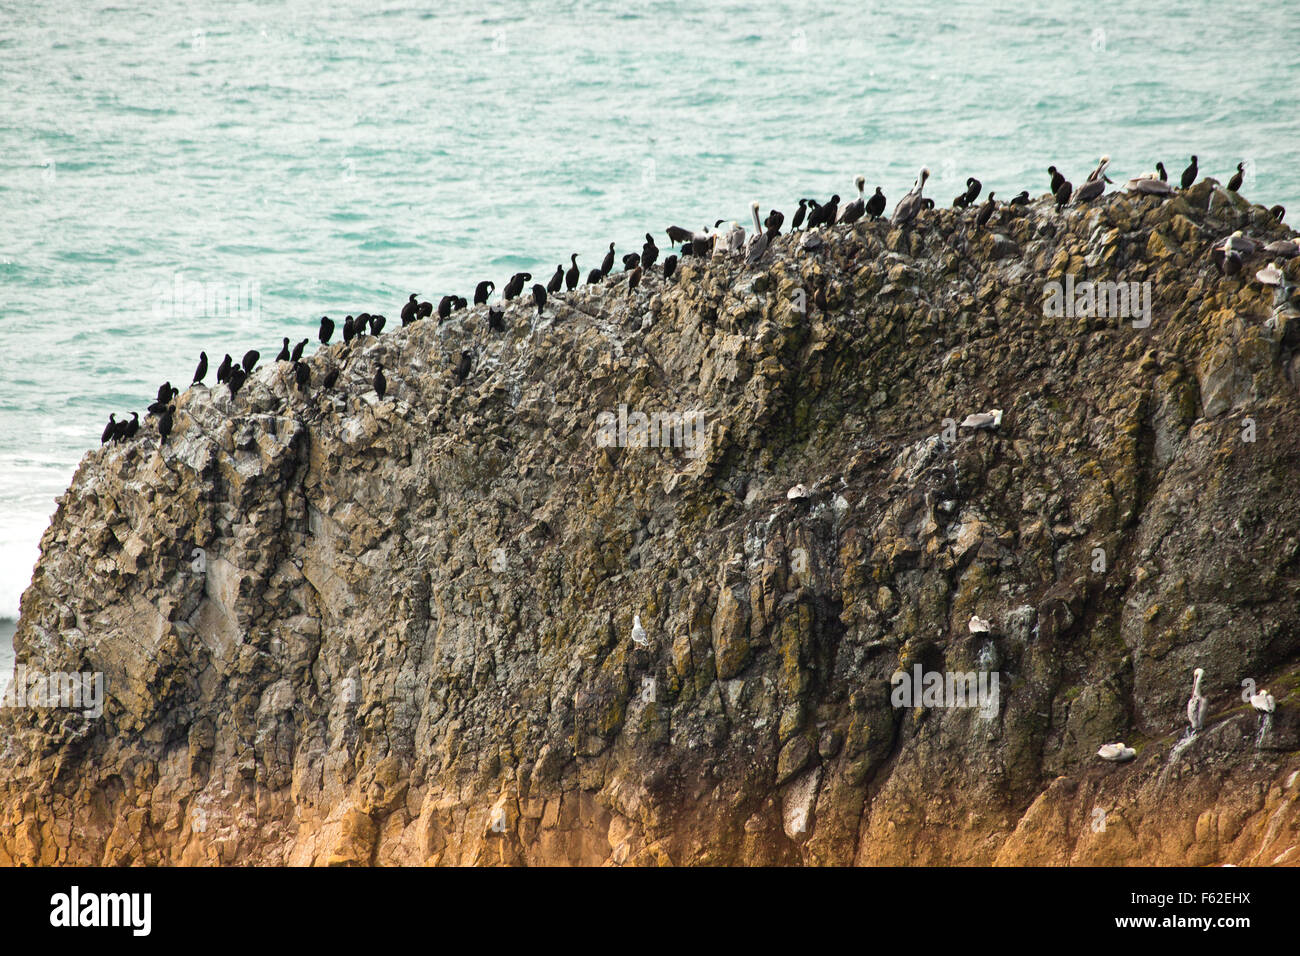 Pelicans and sea birds line a rock on the scenic Oregon coast. Stock Photo